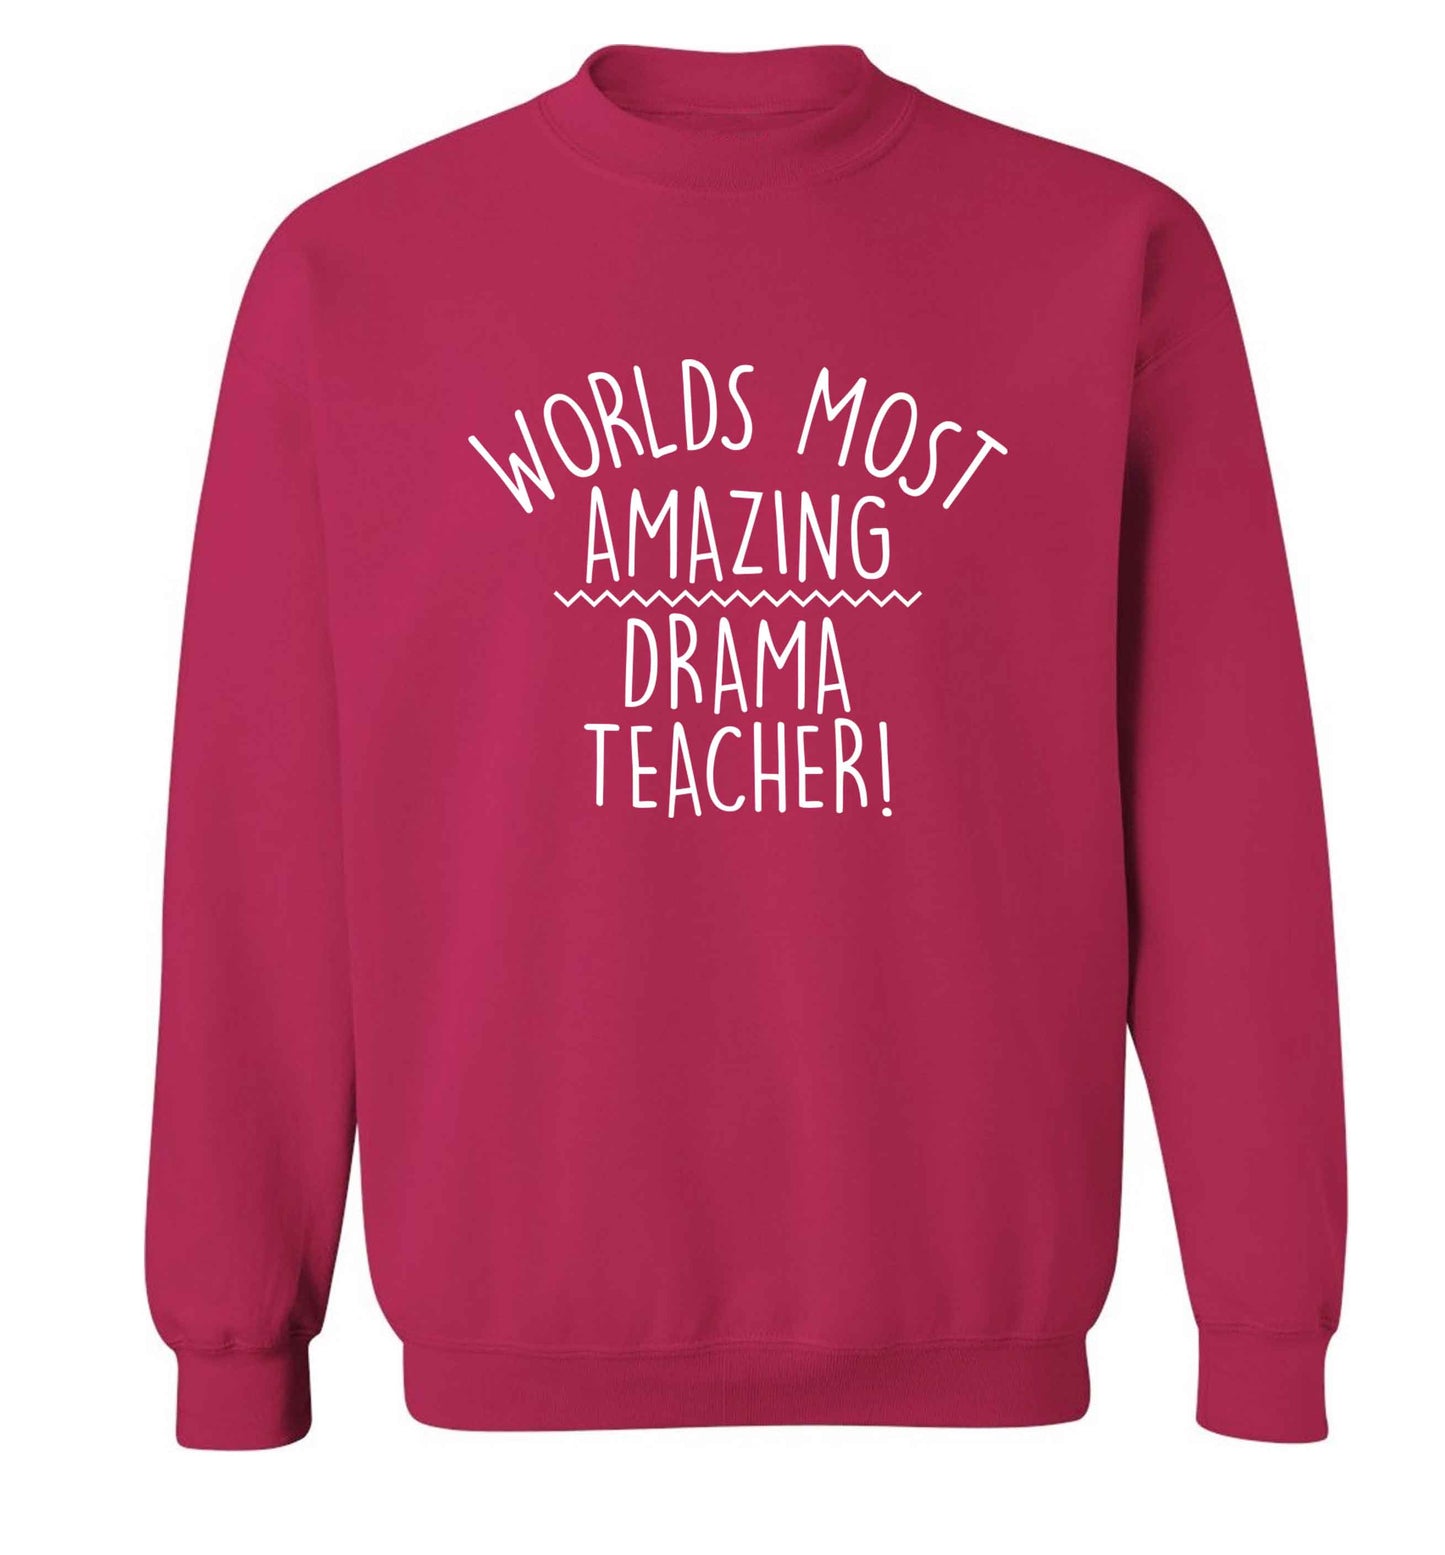 Worlds most amazing drama teacher adult's unisex pink sweater 2XL